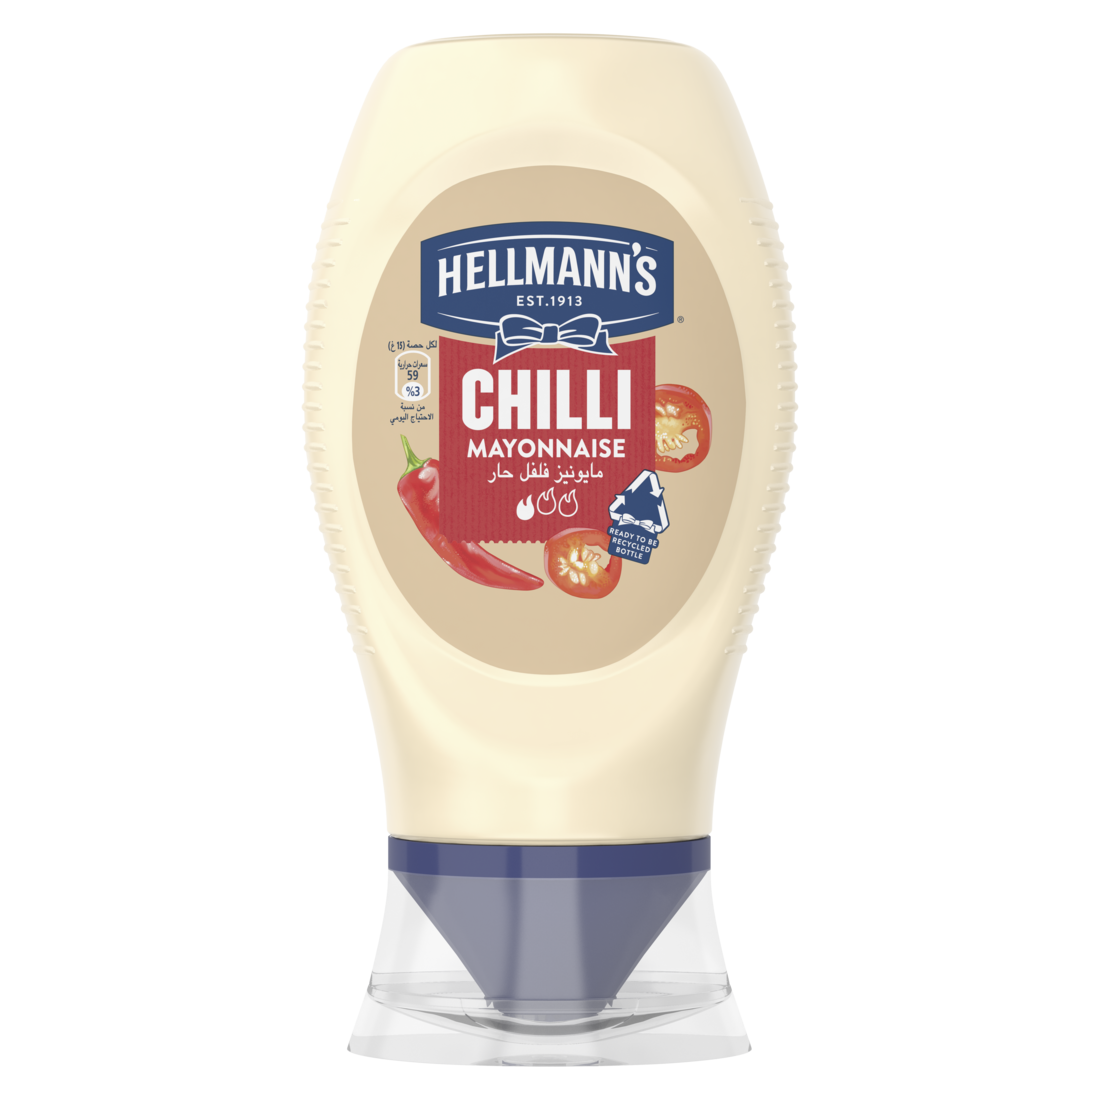 Hellmann's Chilli Mayonnaise